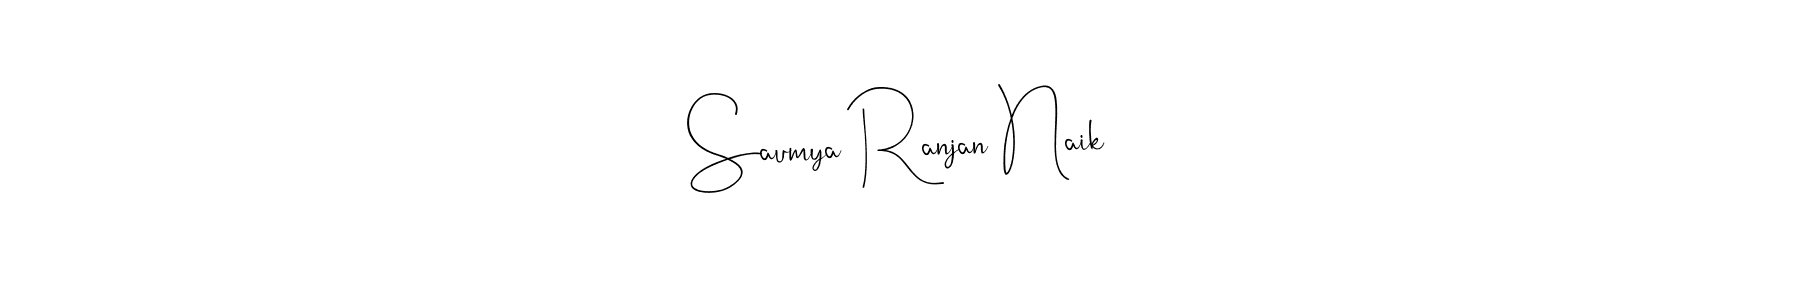 Make a beautiful signature design for name Saumya Ranjan Naik. Use this online signature maker to create a handwritten signature for free. Saumya Ranjan Naik signature style 4 images and pictures png